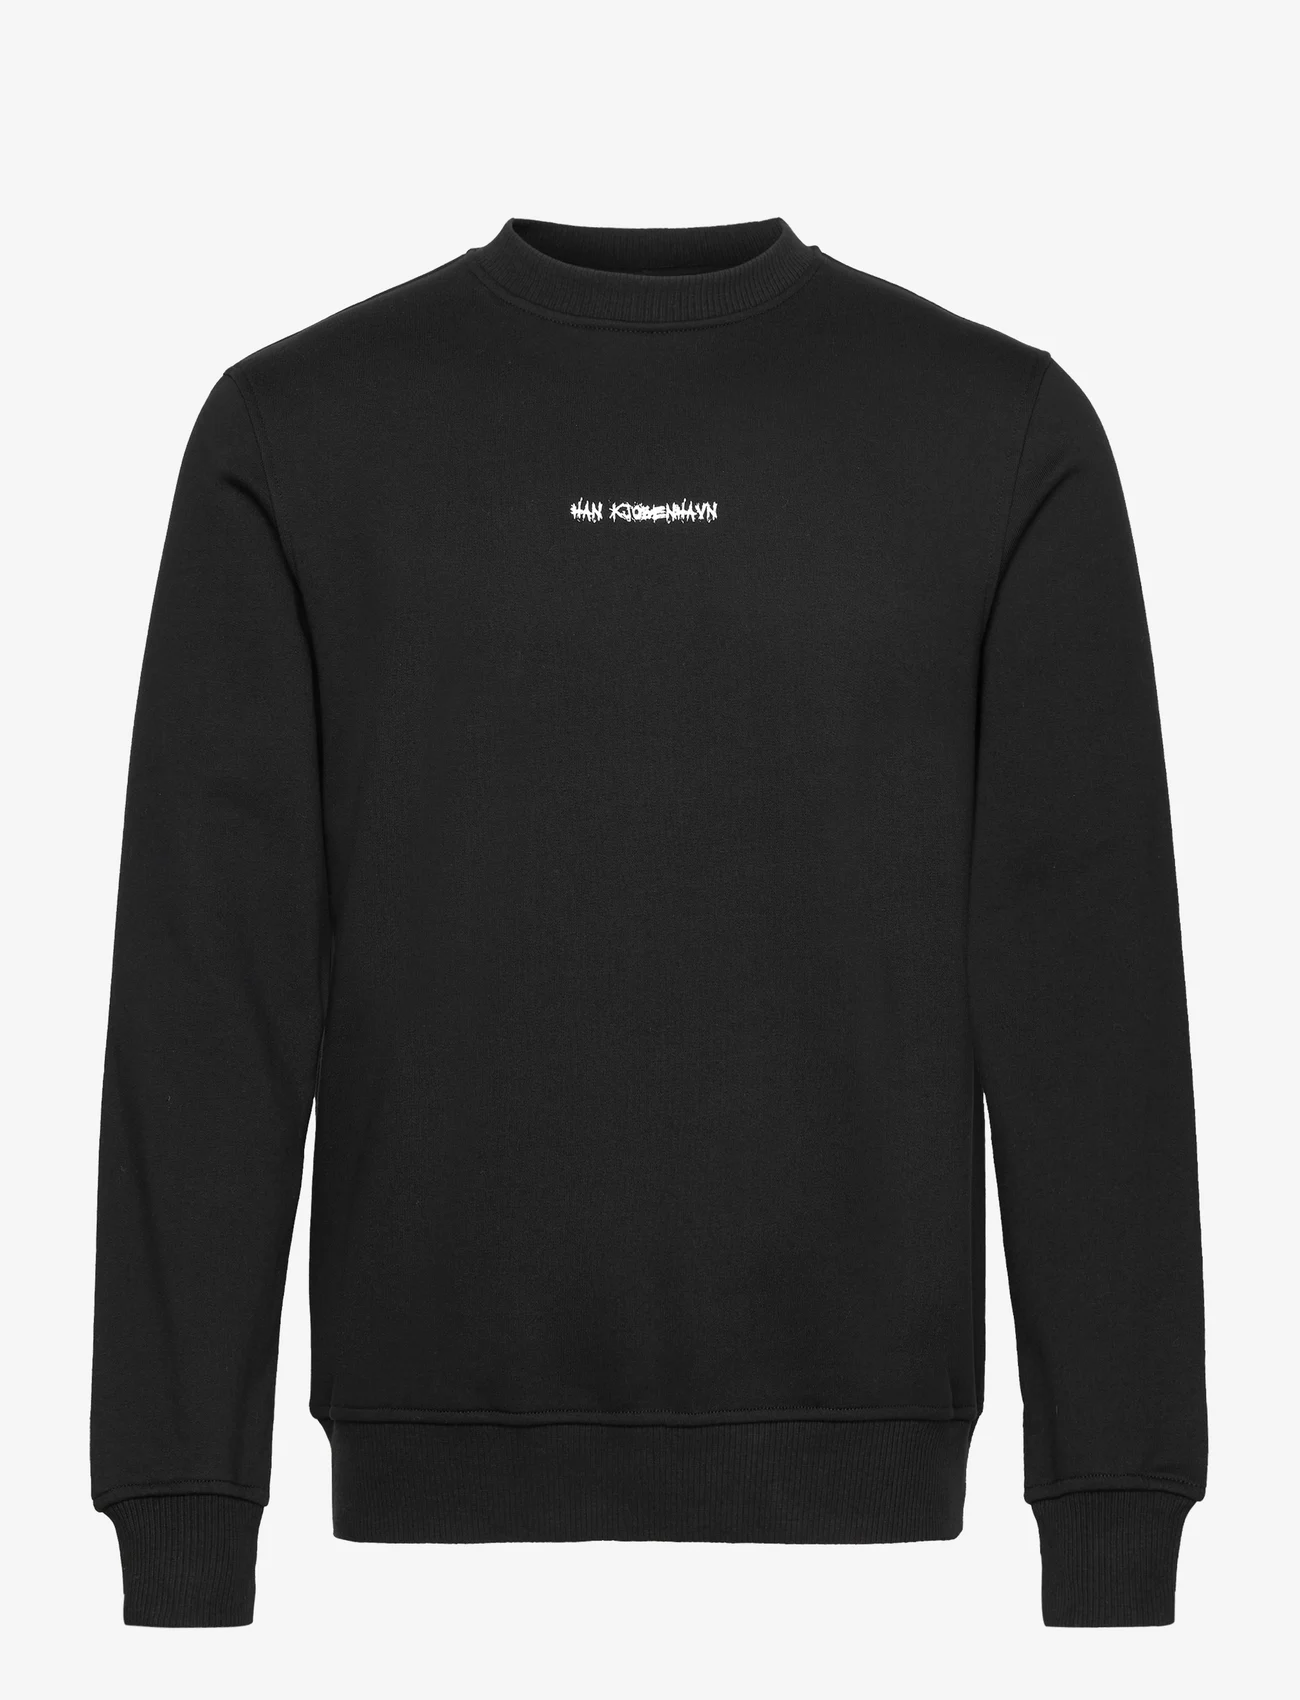 HAN Kjøbenhavn - Regular Crewneck Artwork - hoodies - black - 0